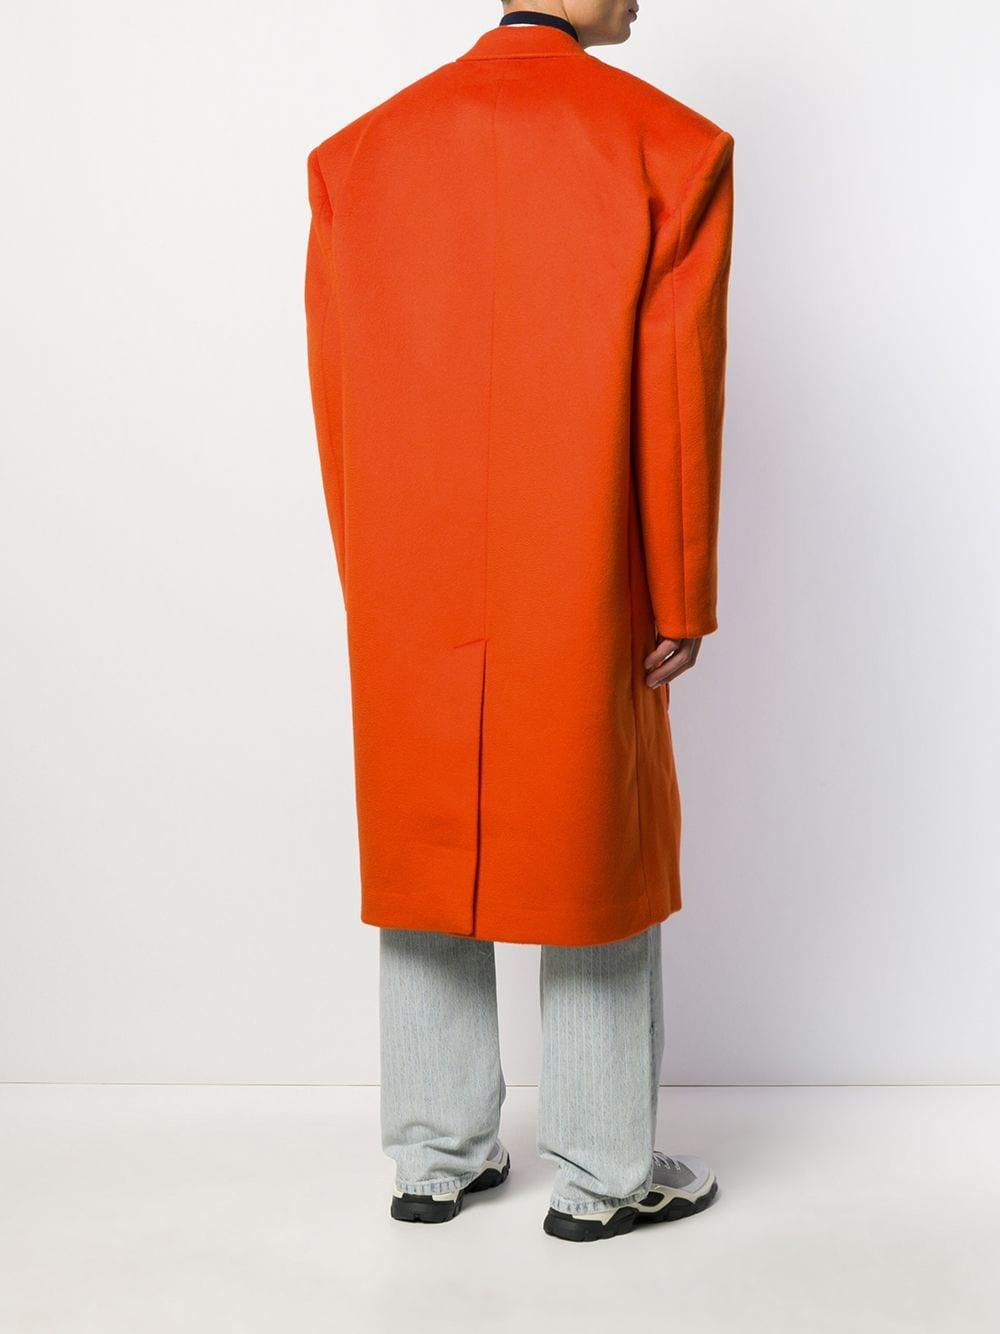 Raf Simons Wool Embellished Oversized Coat in Orange for Men 